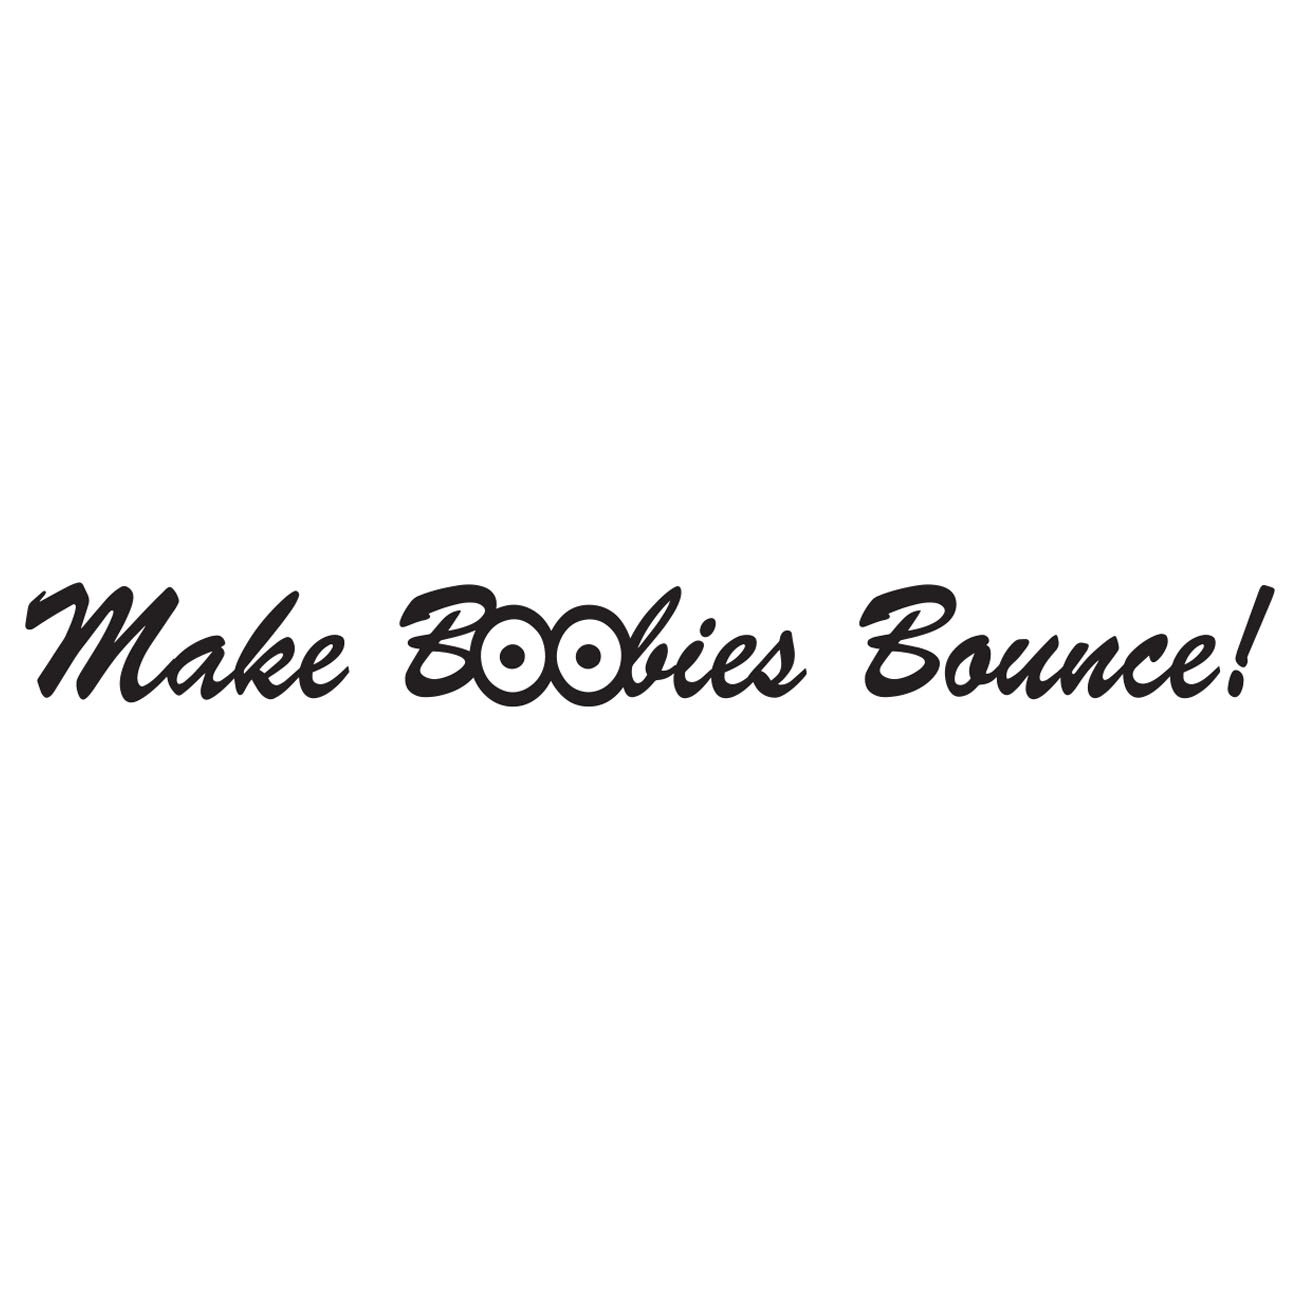 Make boobies bounce